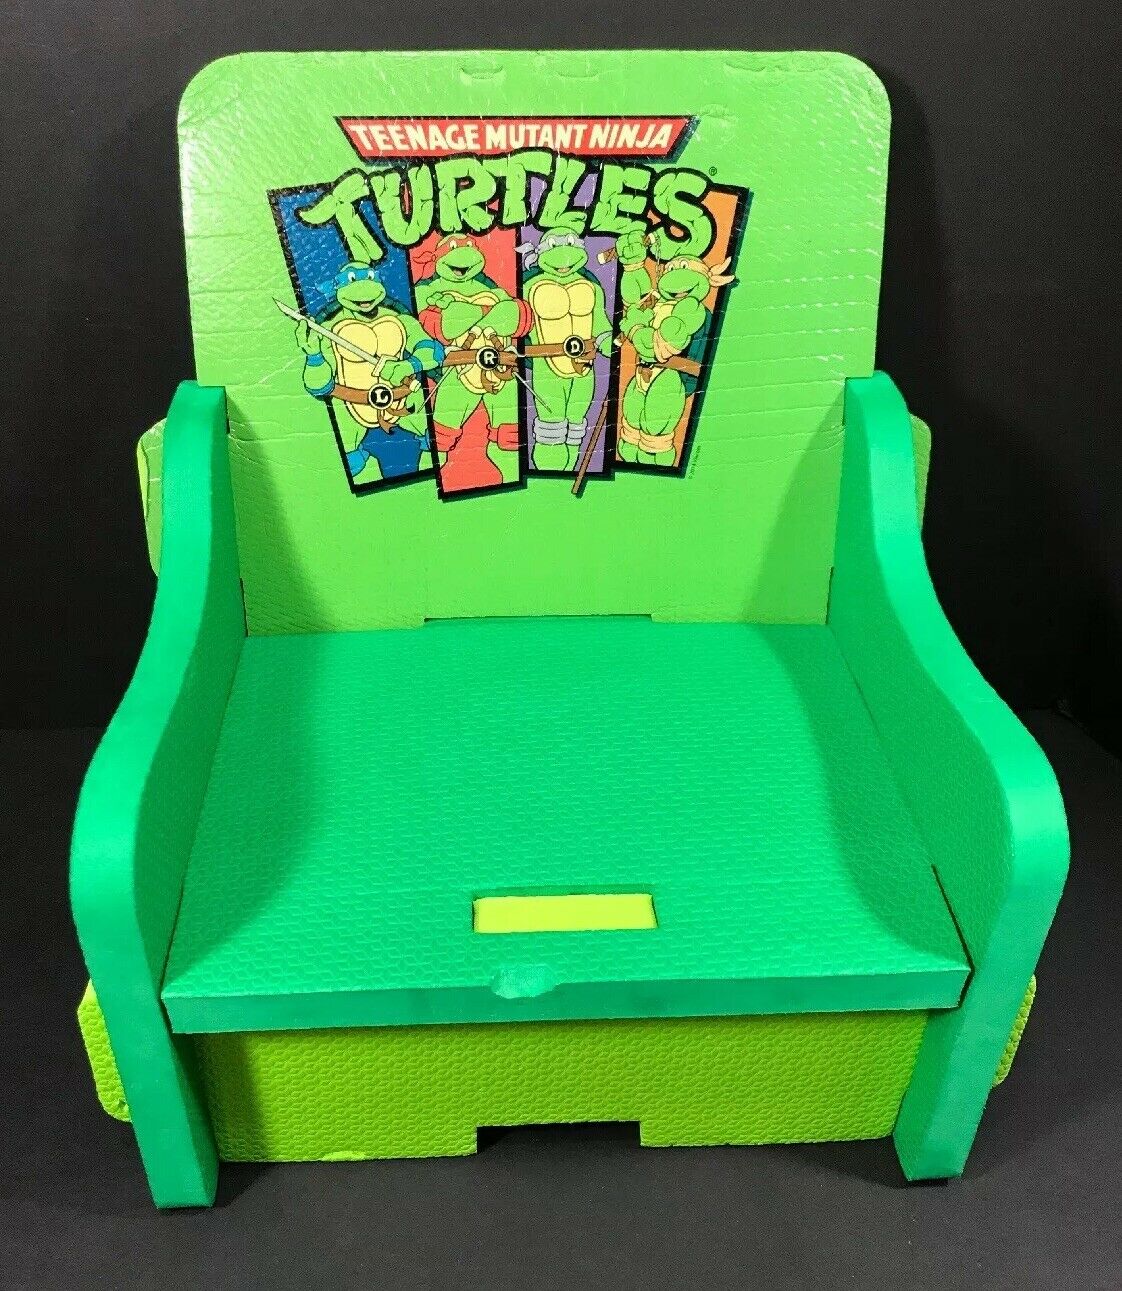 Teenage Mutant Ninja Turtles Foam Toddler Chair Interlocking Pieces